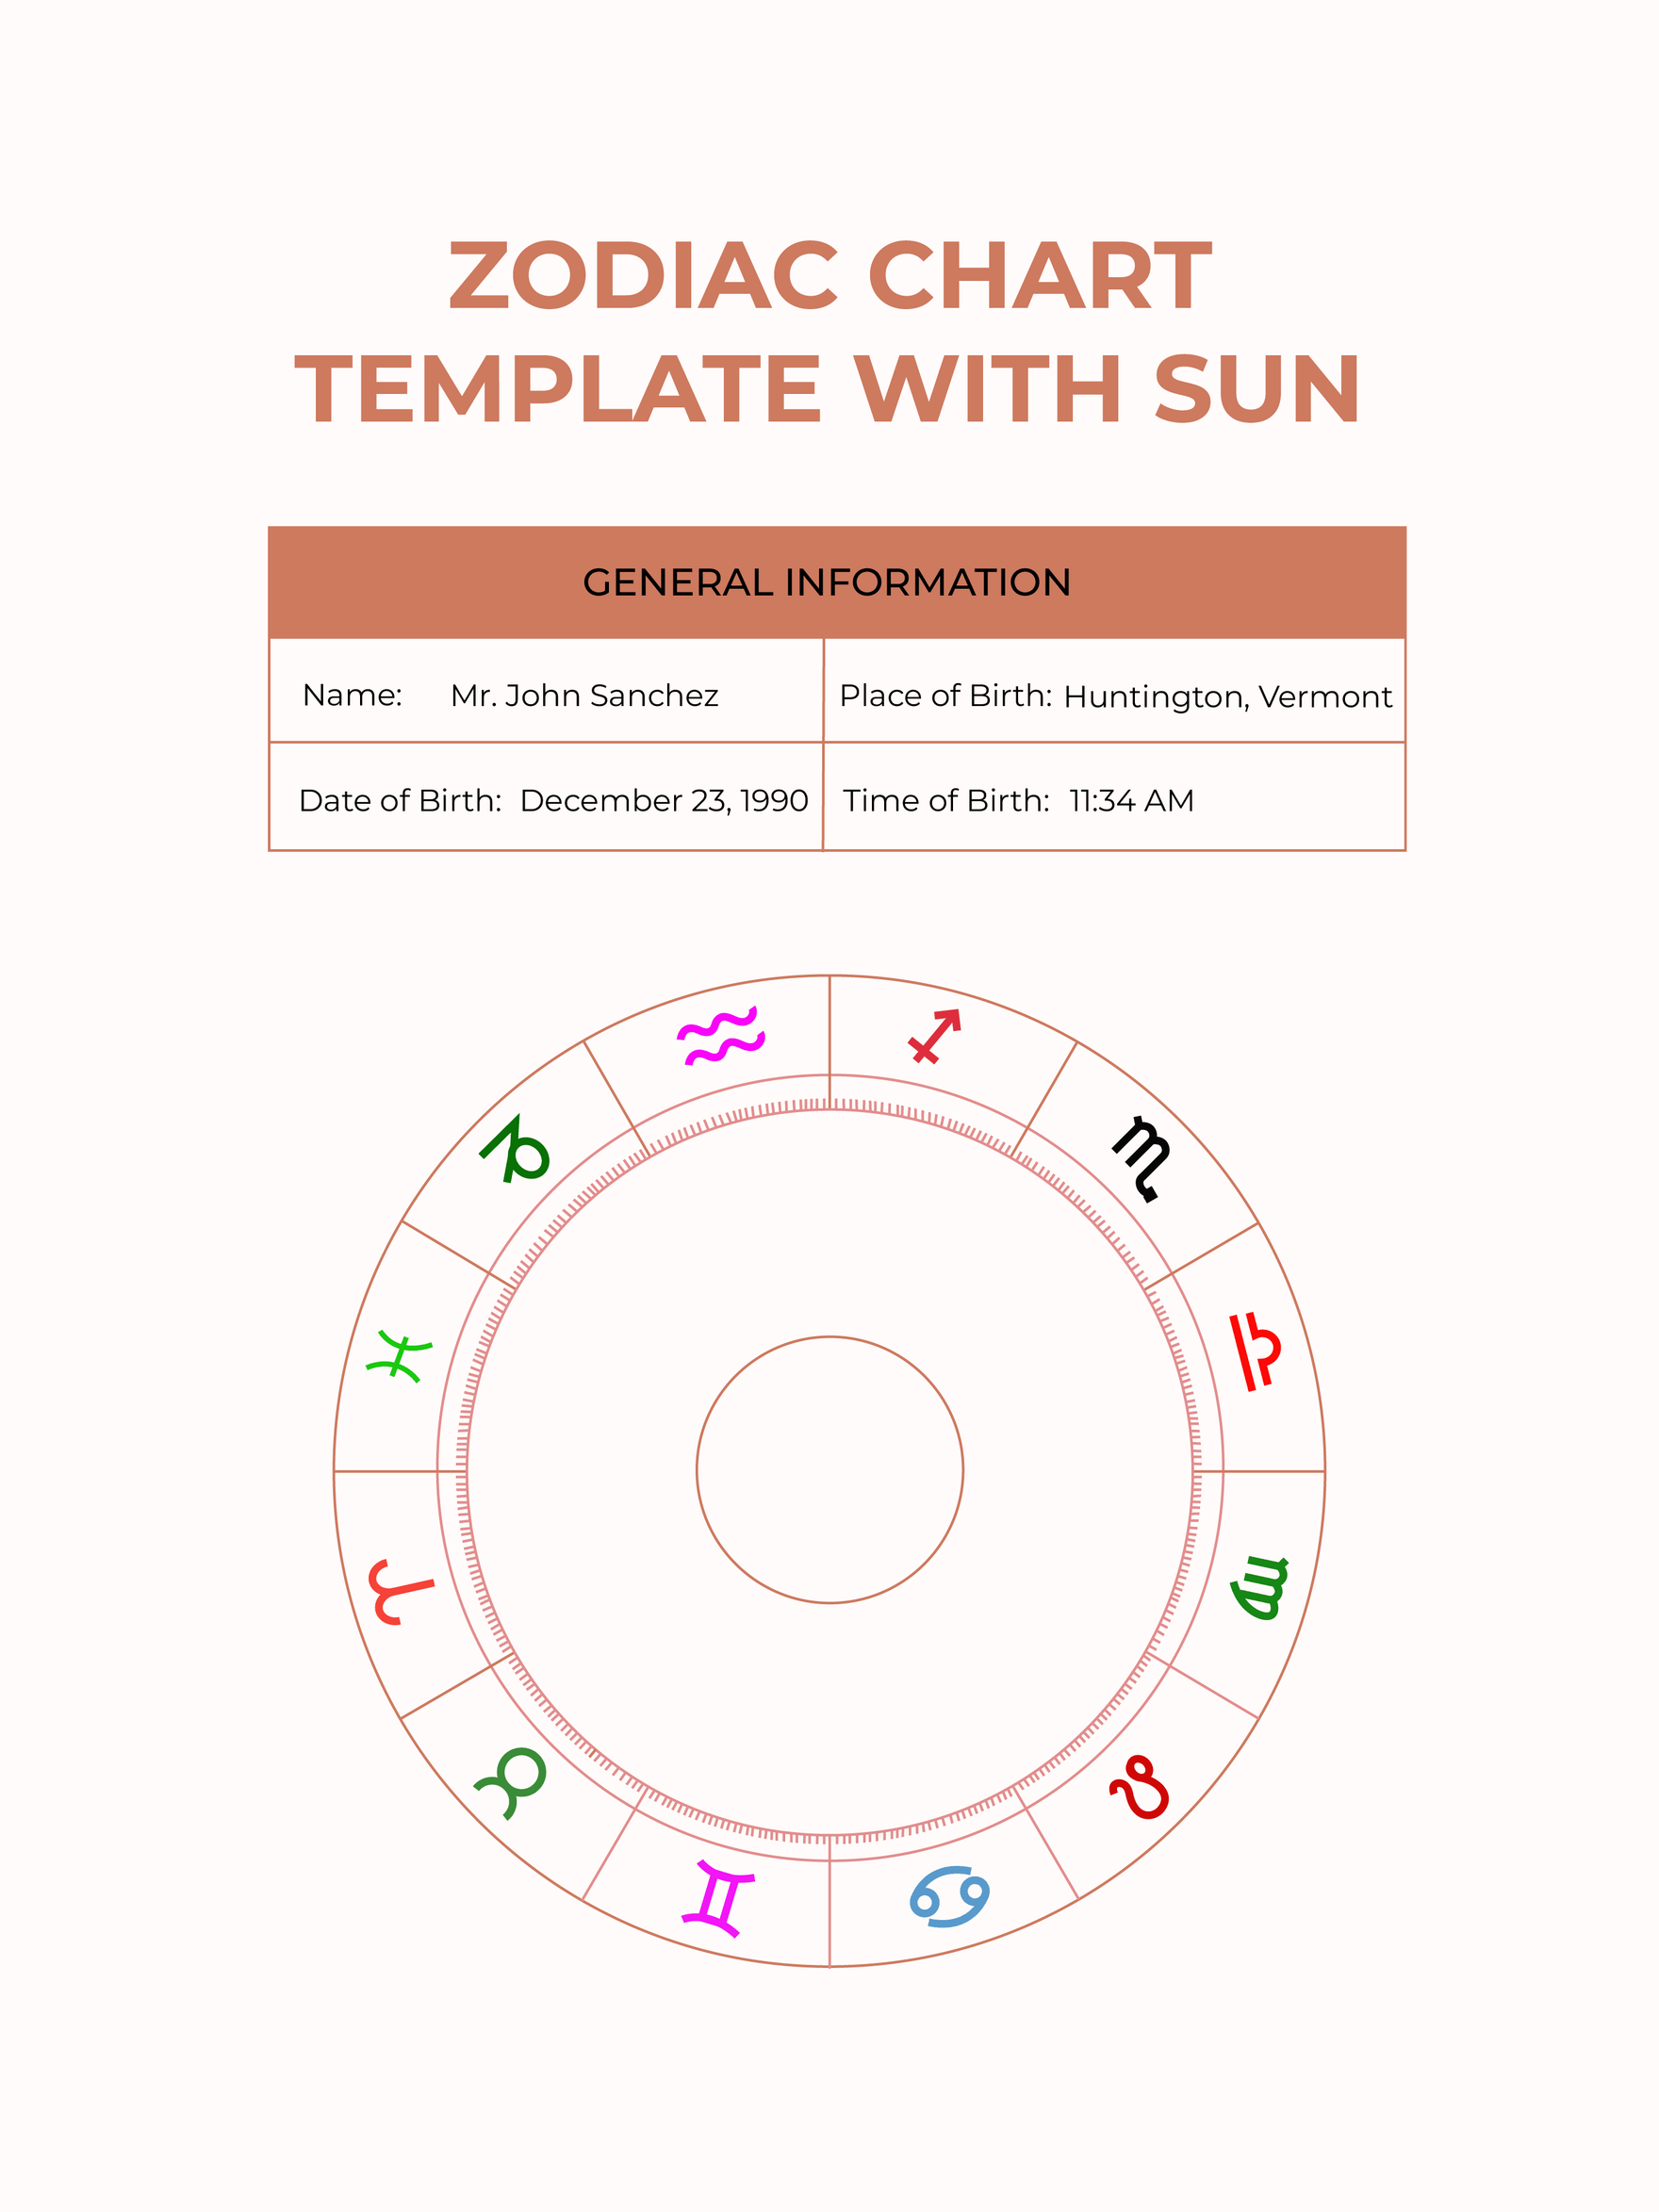 Zodiac Chart Template With Sun in PDF, Illustrator